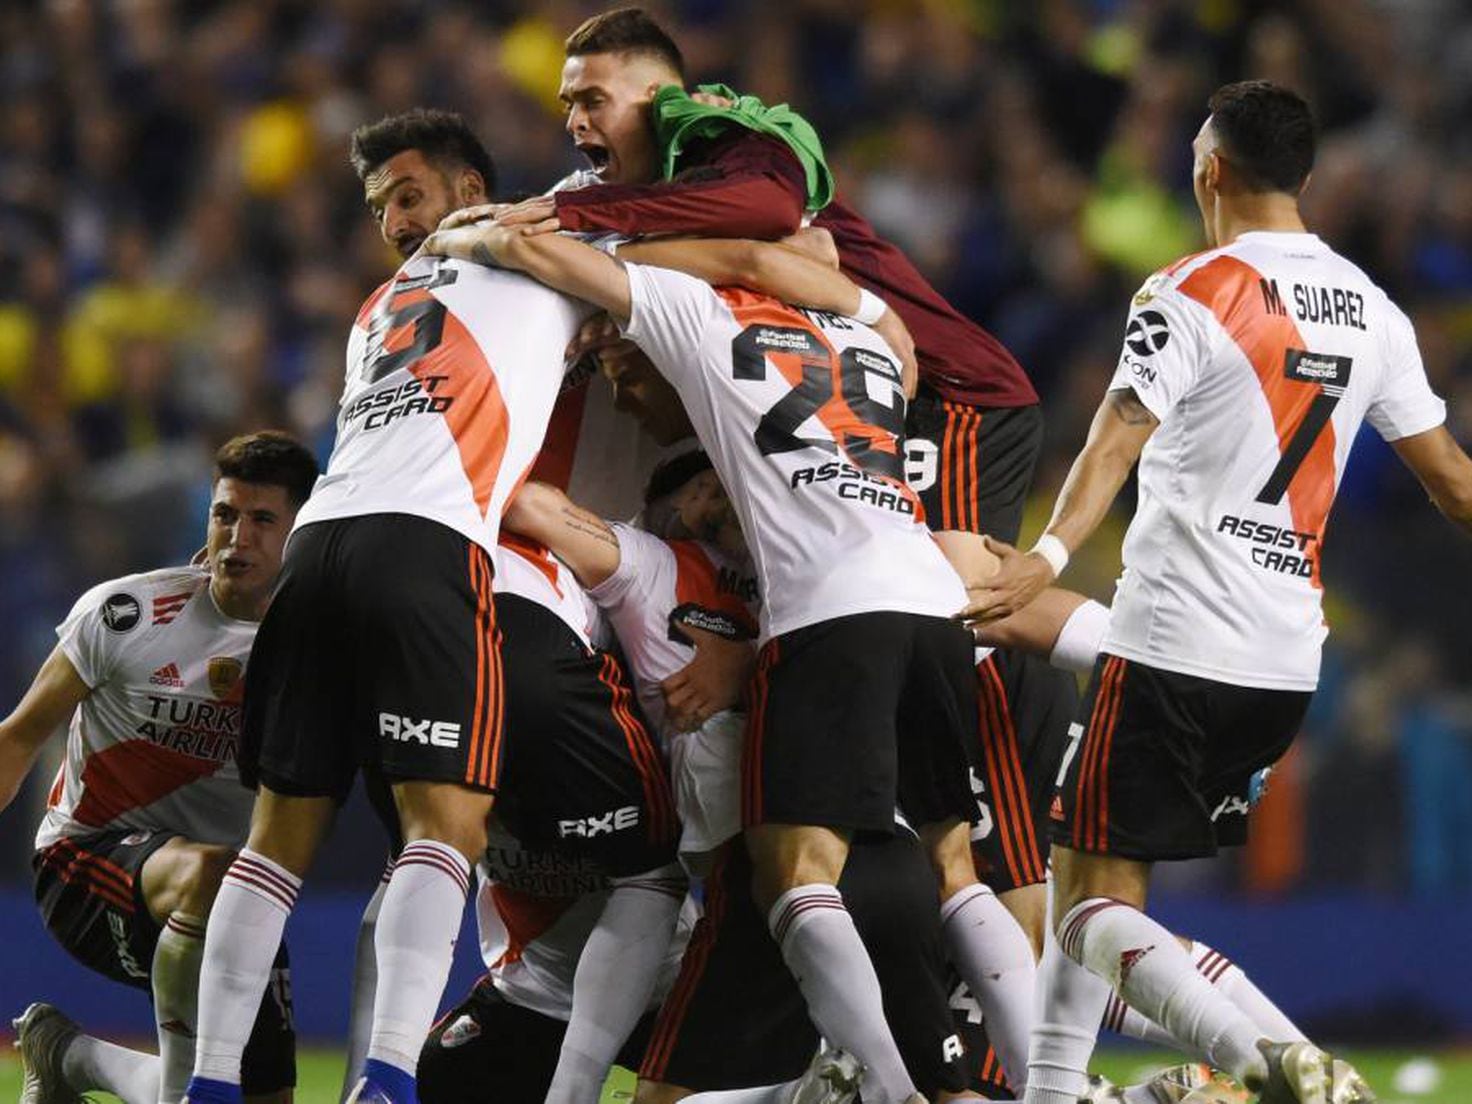 Copa Libertadores: All-Brazilian Affair For Final At Empty Maracana